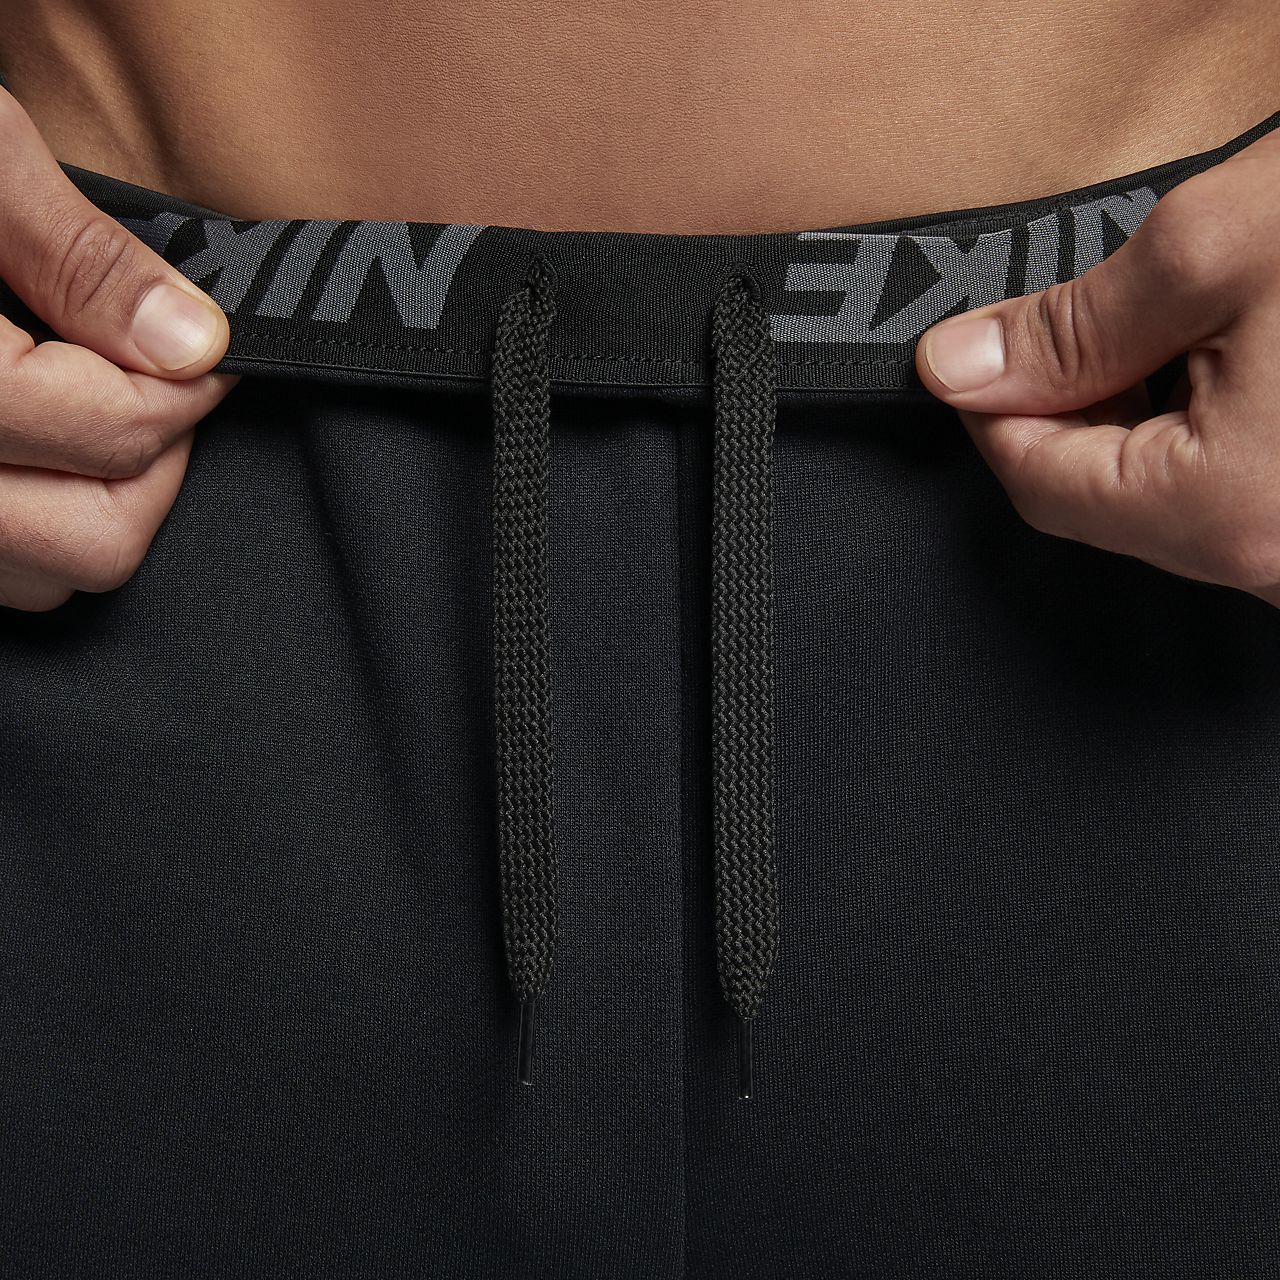 Nike Dri Fit Men S Tapered Fleece Training Pants